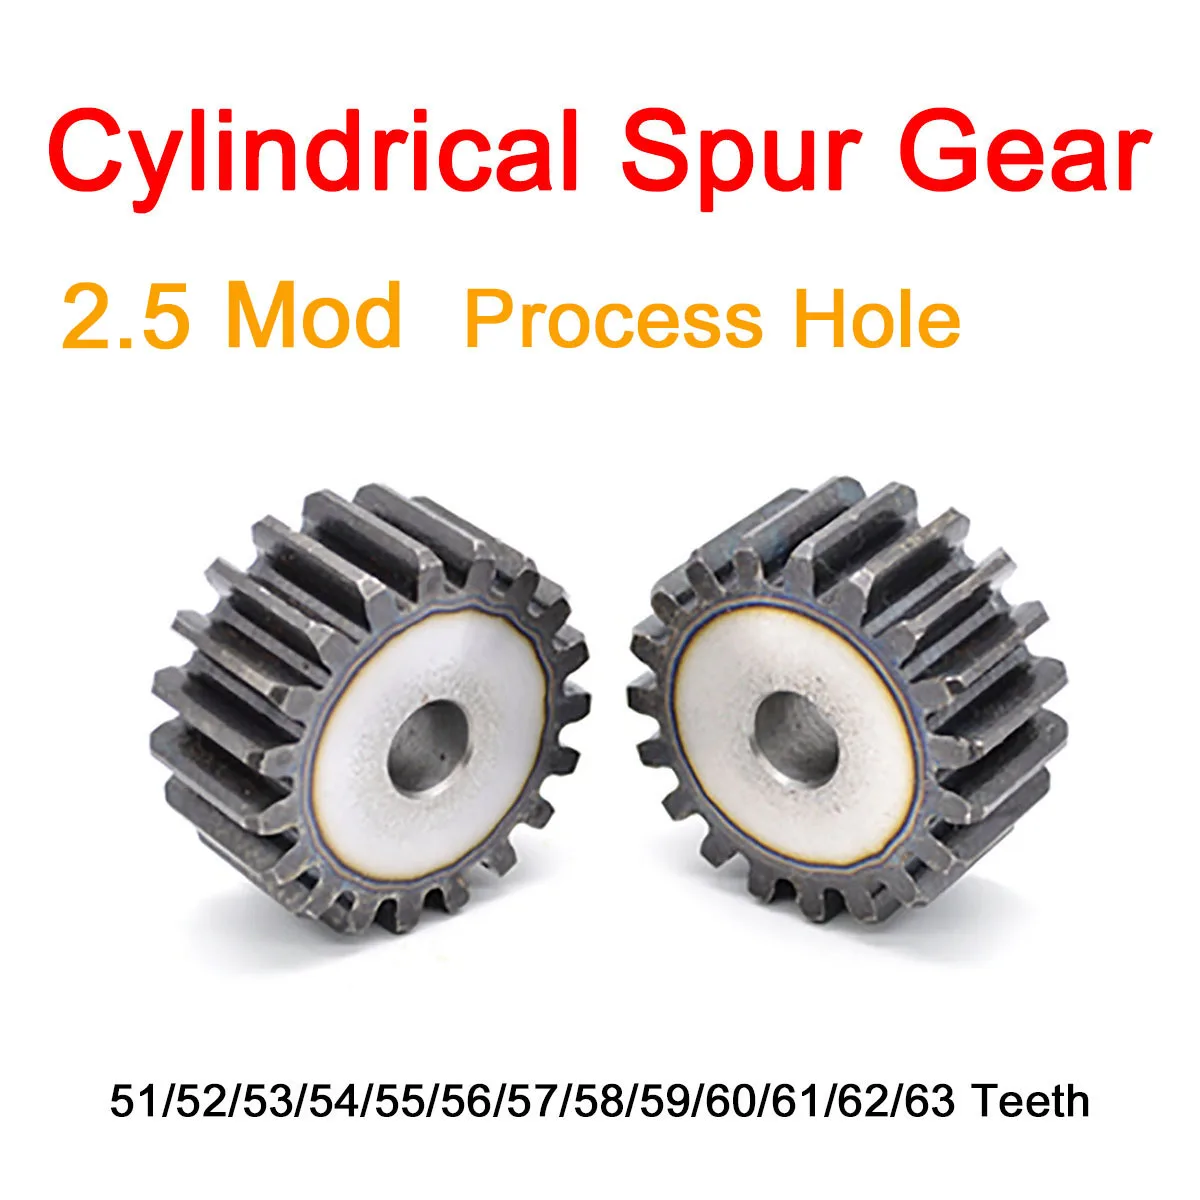 

1Pc 2.5Mod Cylindrical Spur Gear 51/52/53/54/55/56/57/58/59/60/61/62/63 Teeth 45# Steel Transmission Gear Tooth Pitch 7.85mm